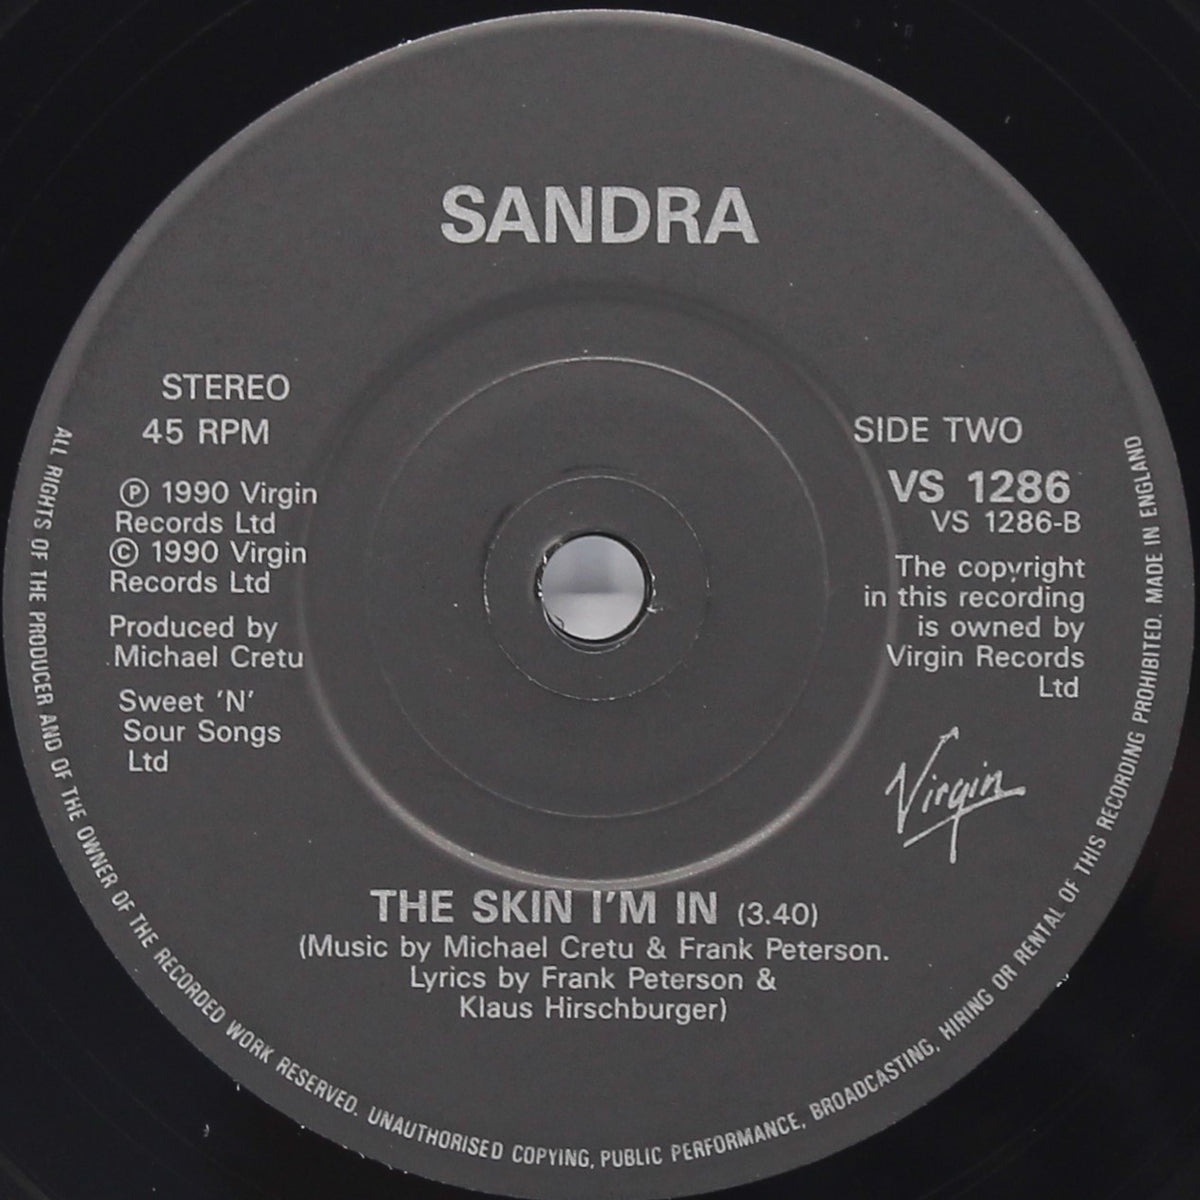 Sandra – (Life May Be) A Big Insanity, Vinyl, 7&quot;, Single, 45 RPM, UK 1990